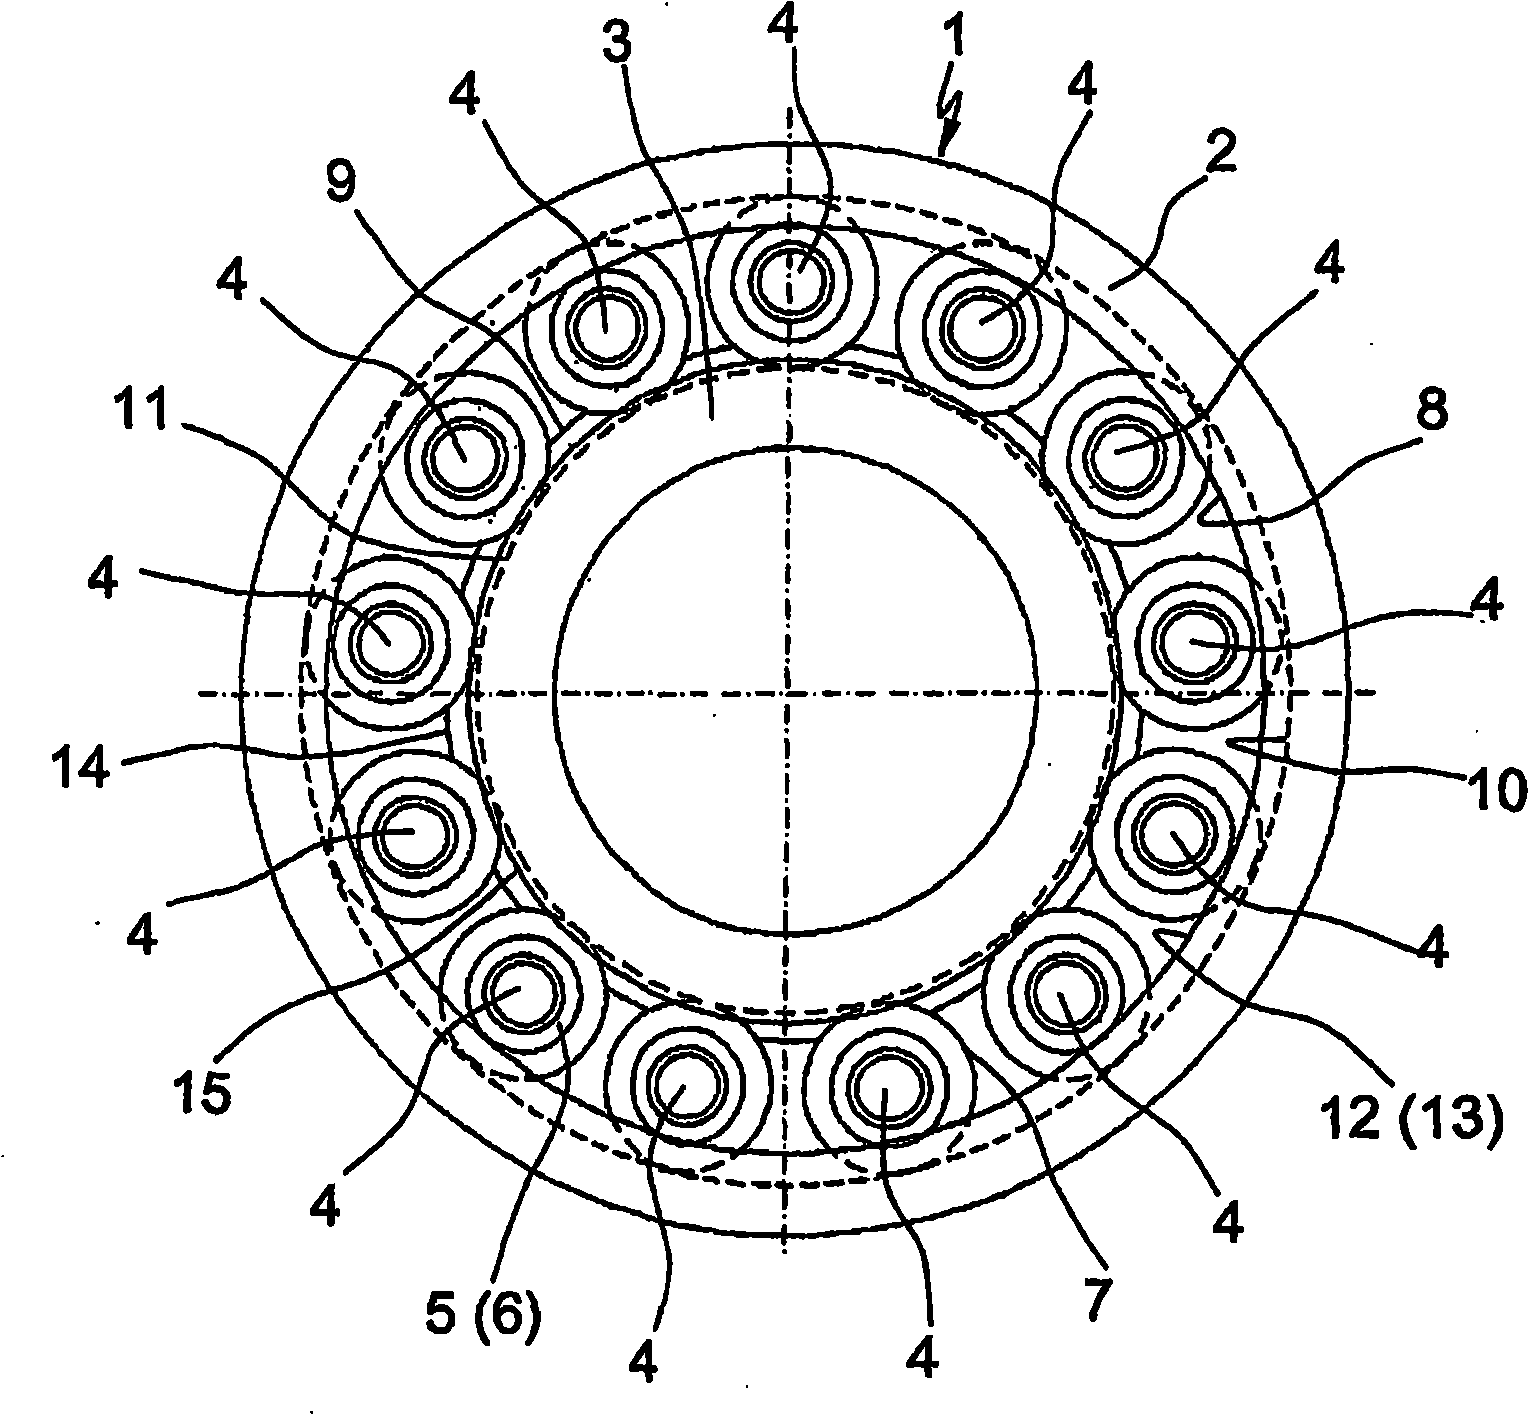 Radial rolling bearing, in particular single-row spherical-roller bearing